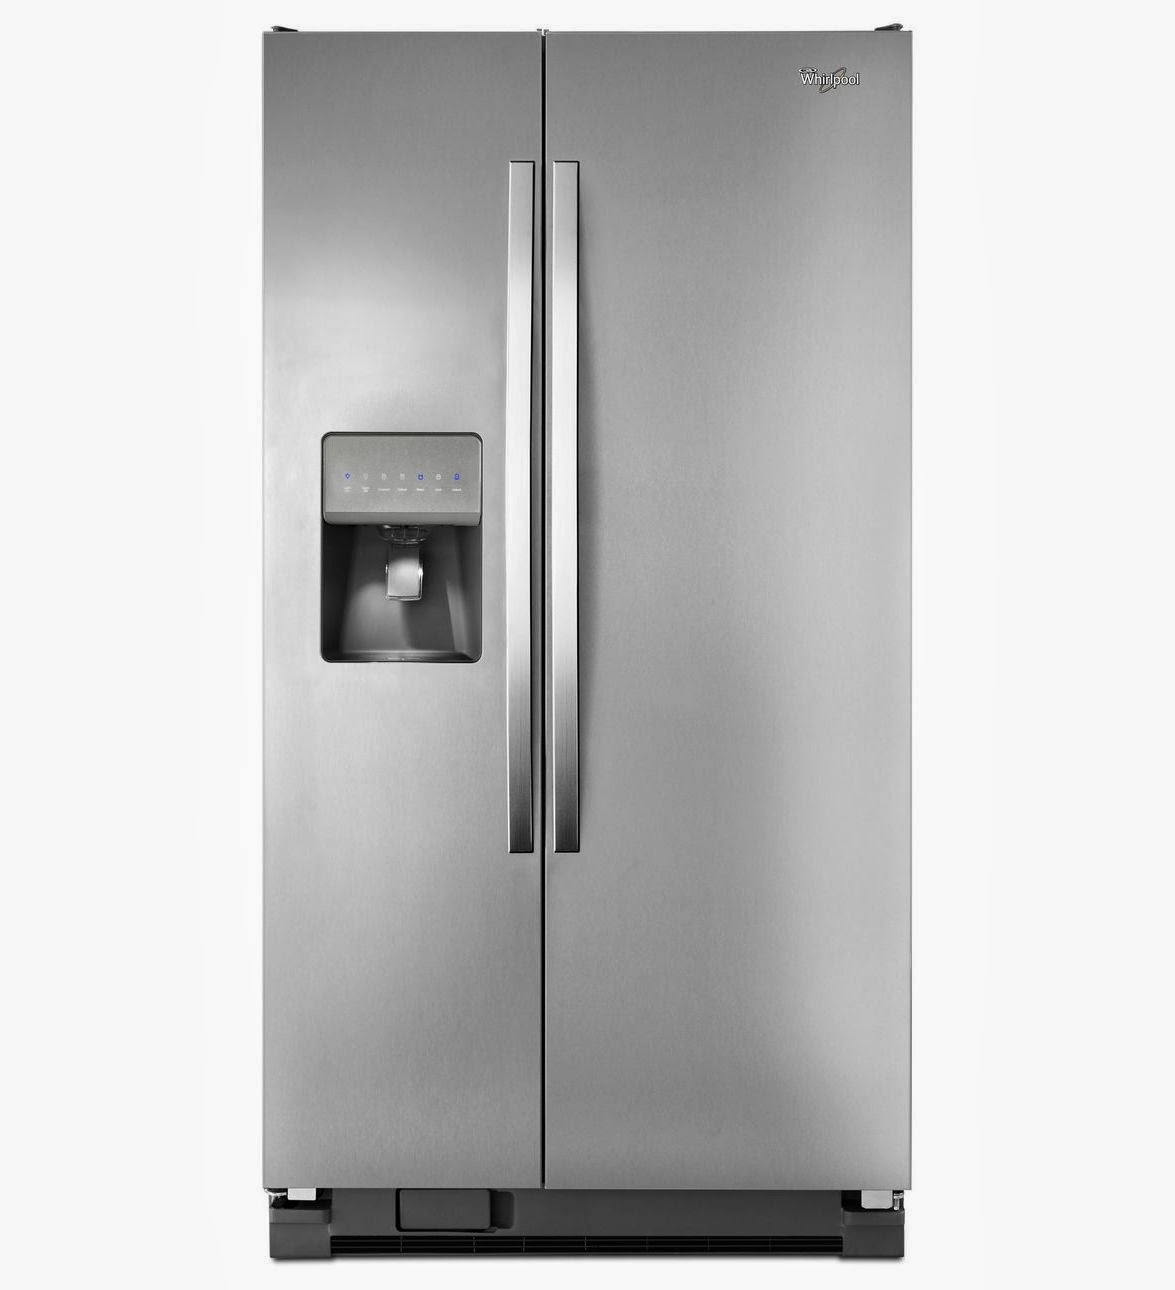 whirlpool-refrigerator-brand-wrs325fdam-side-by-side-refrigerator